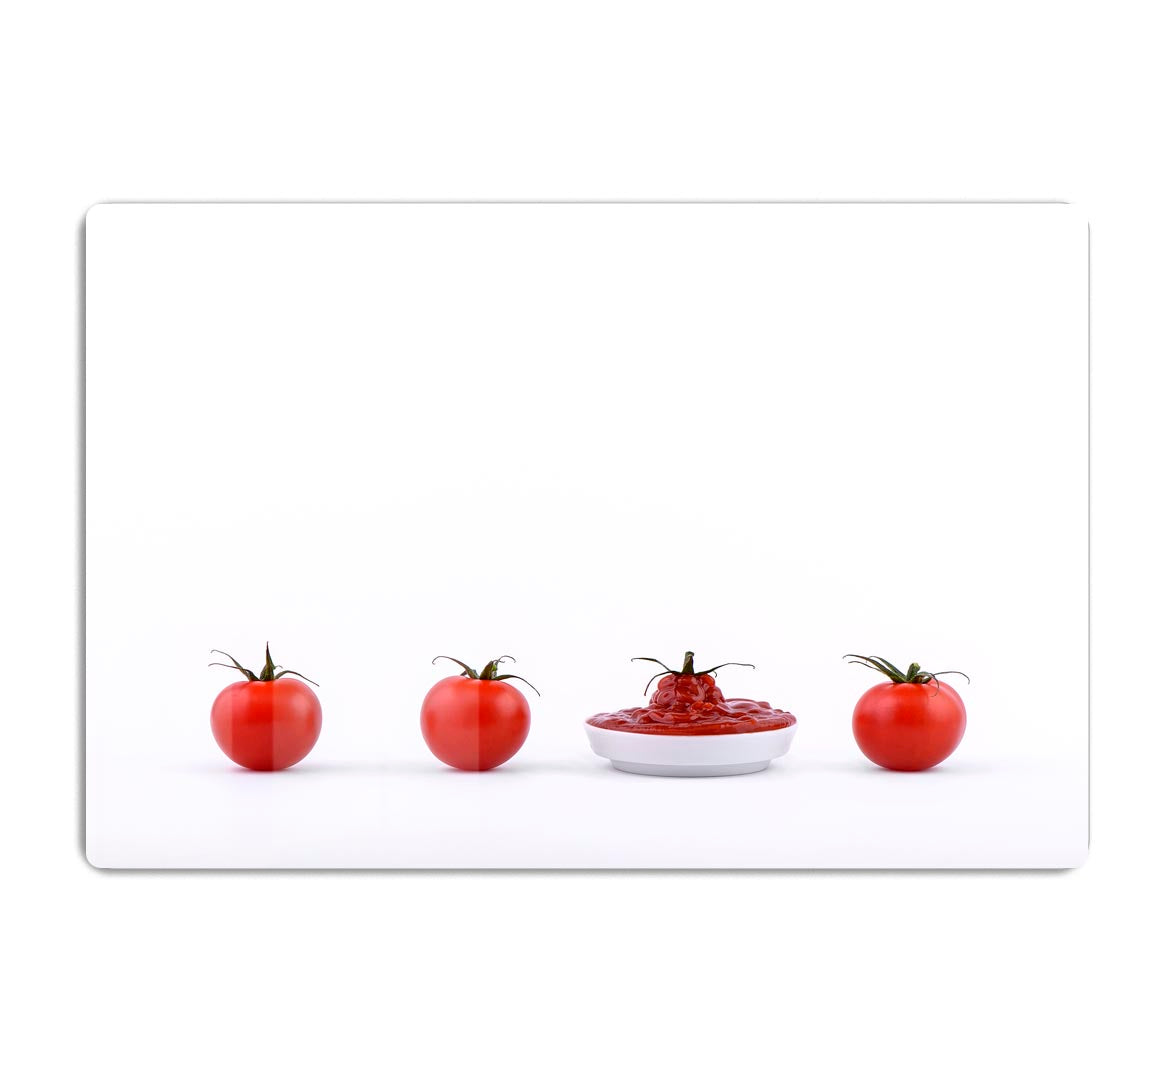 Tomato Tomato Puree Tomato Acrylic Block - 1x - 1